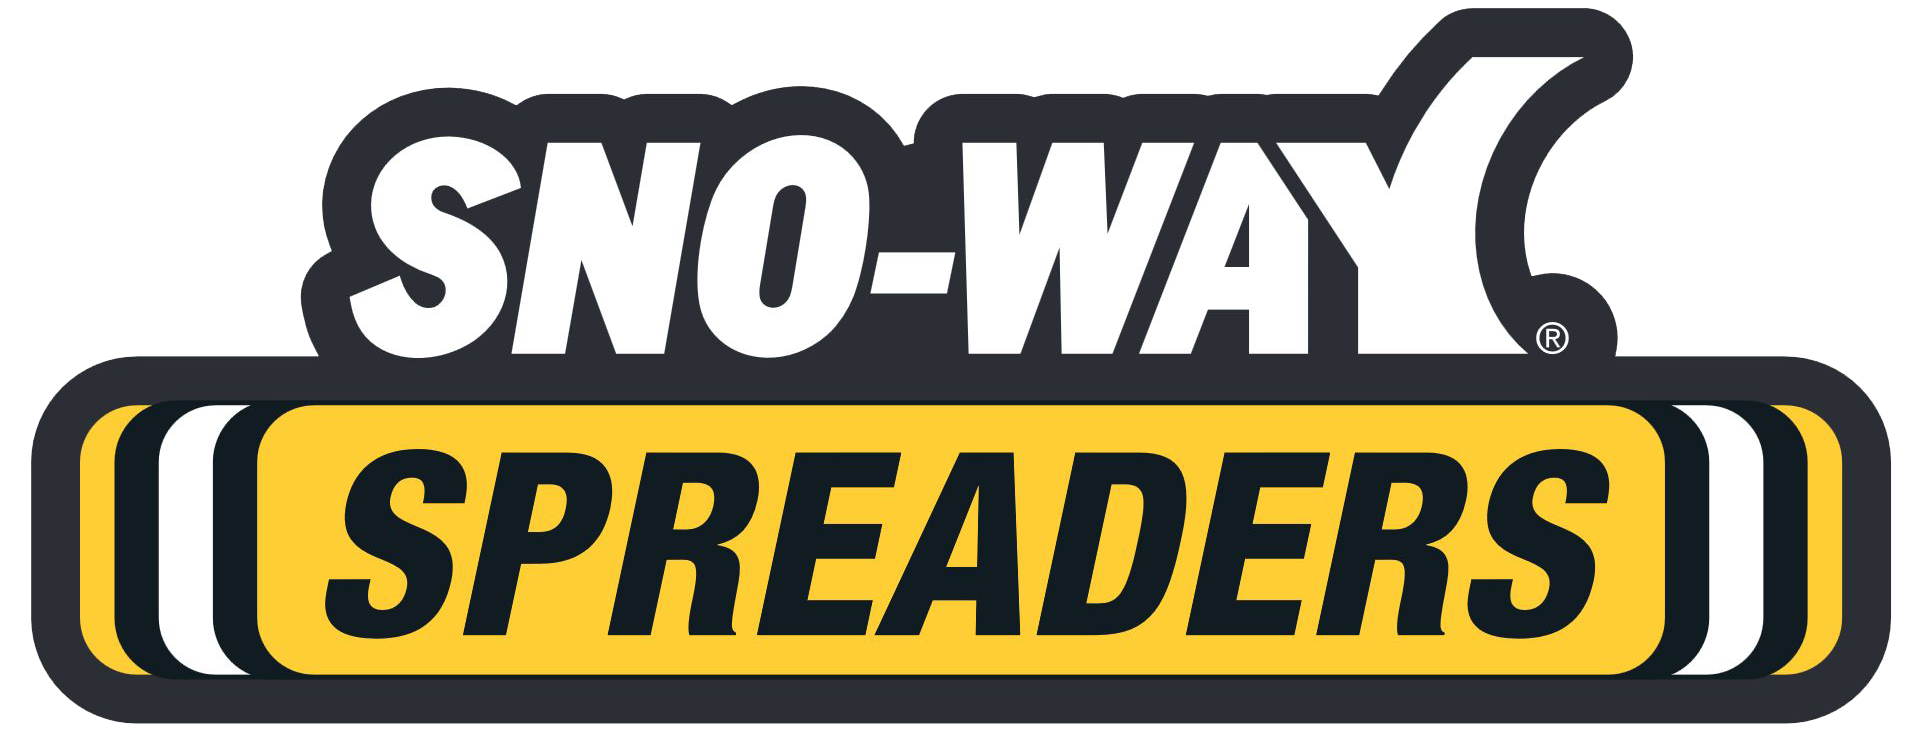 snowway spreader logo